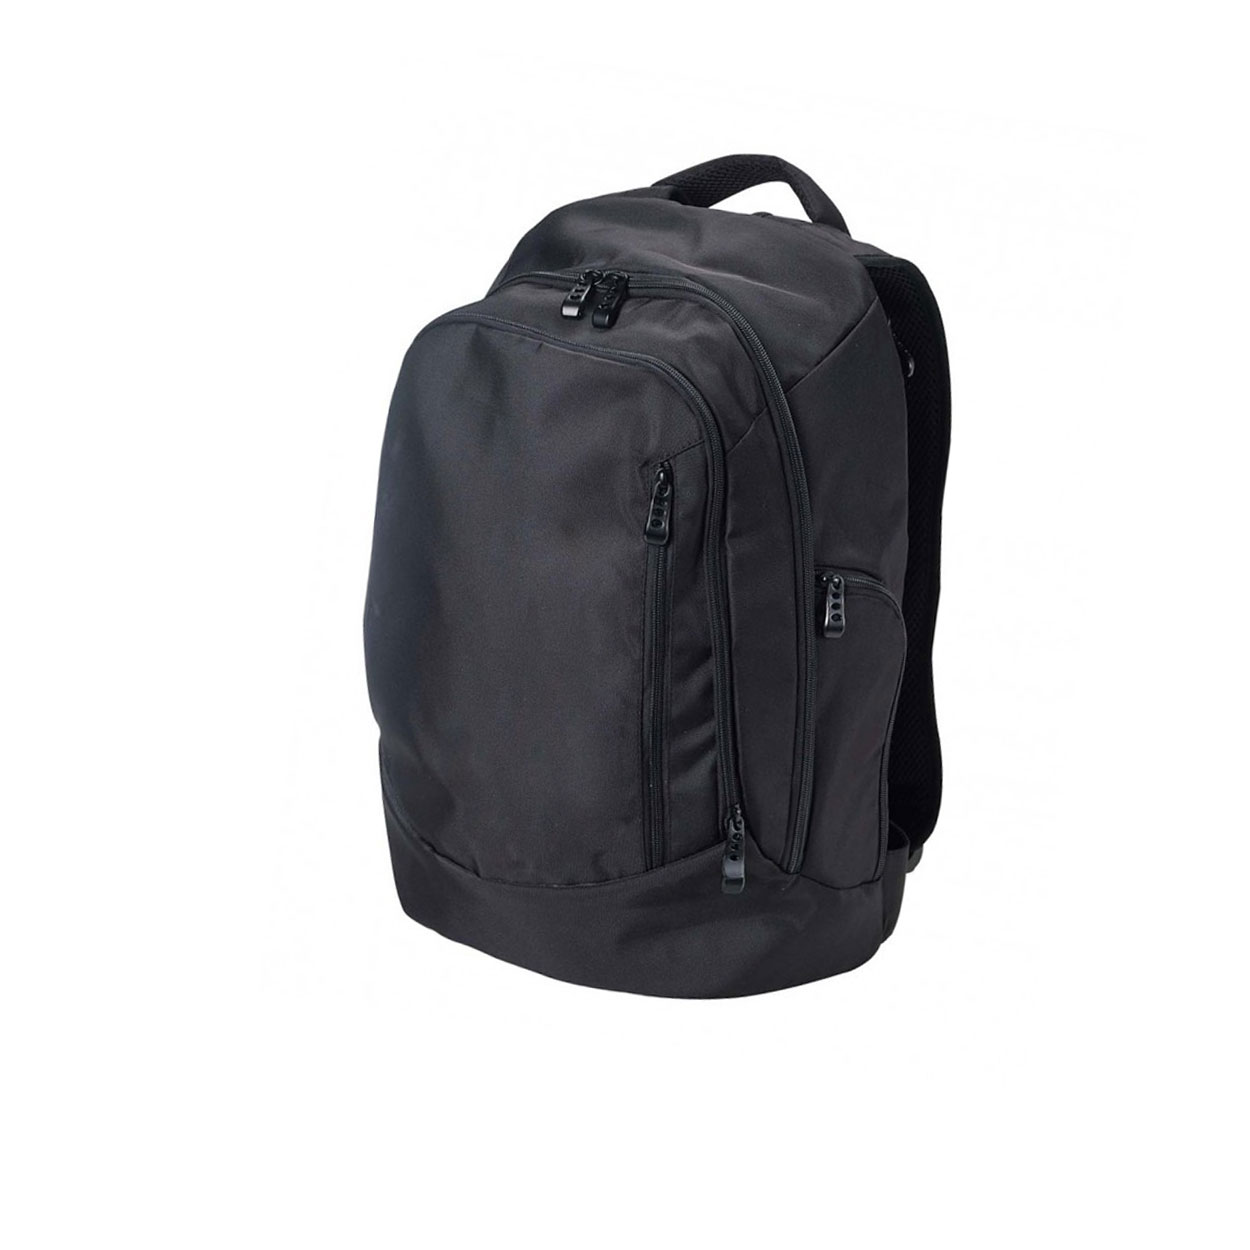 Product Details: Pro Backpack - Black (BAGEDGE BE044 Tech Backpack)